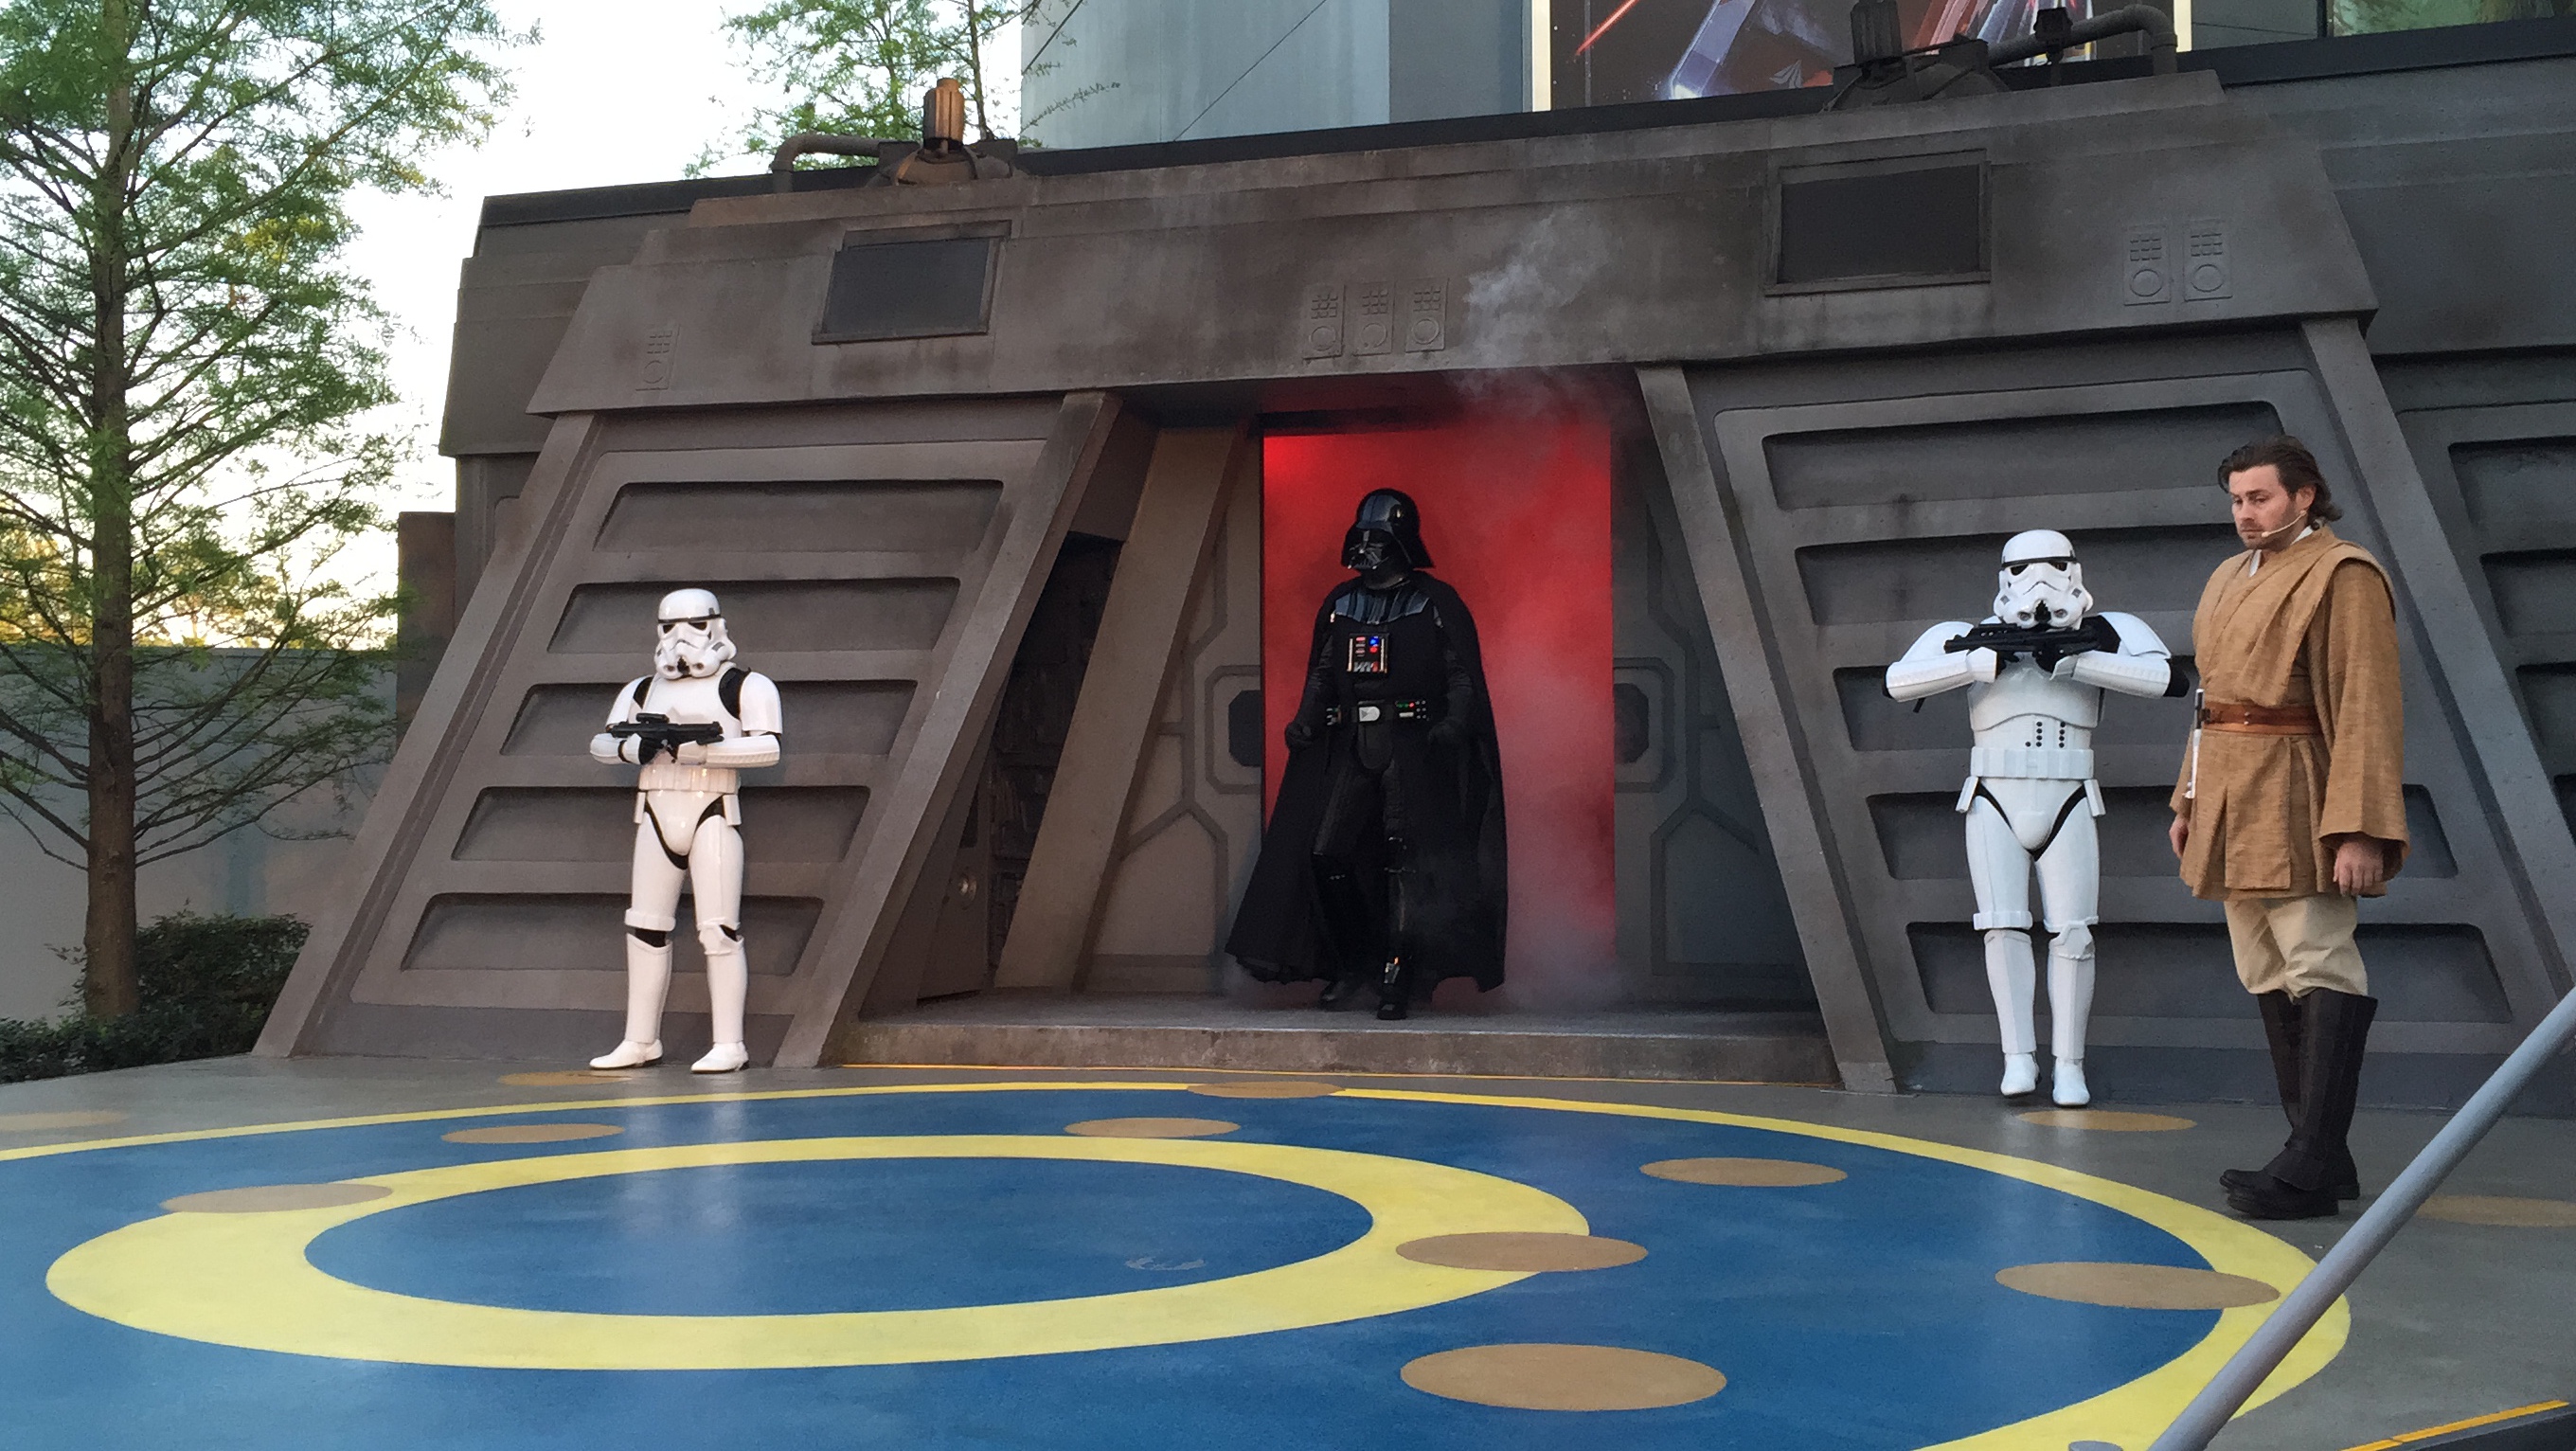 Star Wars Jedi Training Academy at Disney’s Hollywood Studios